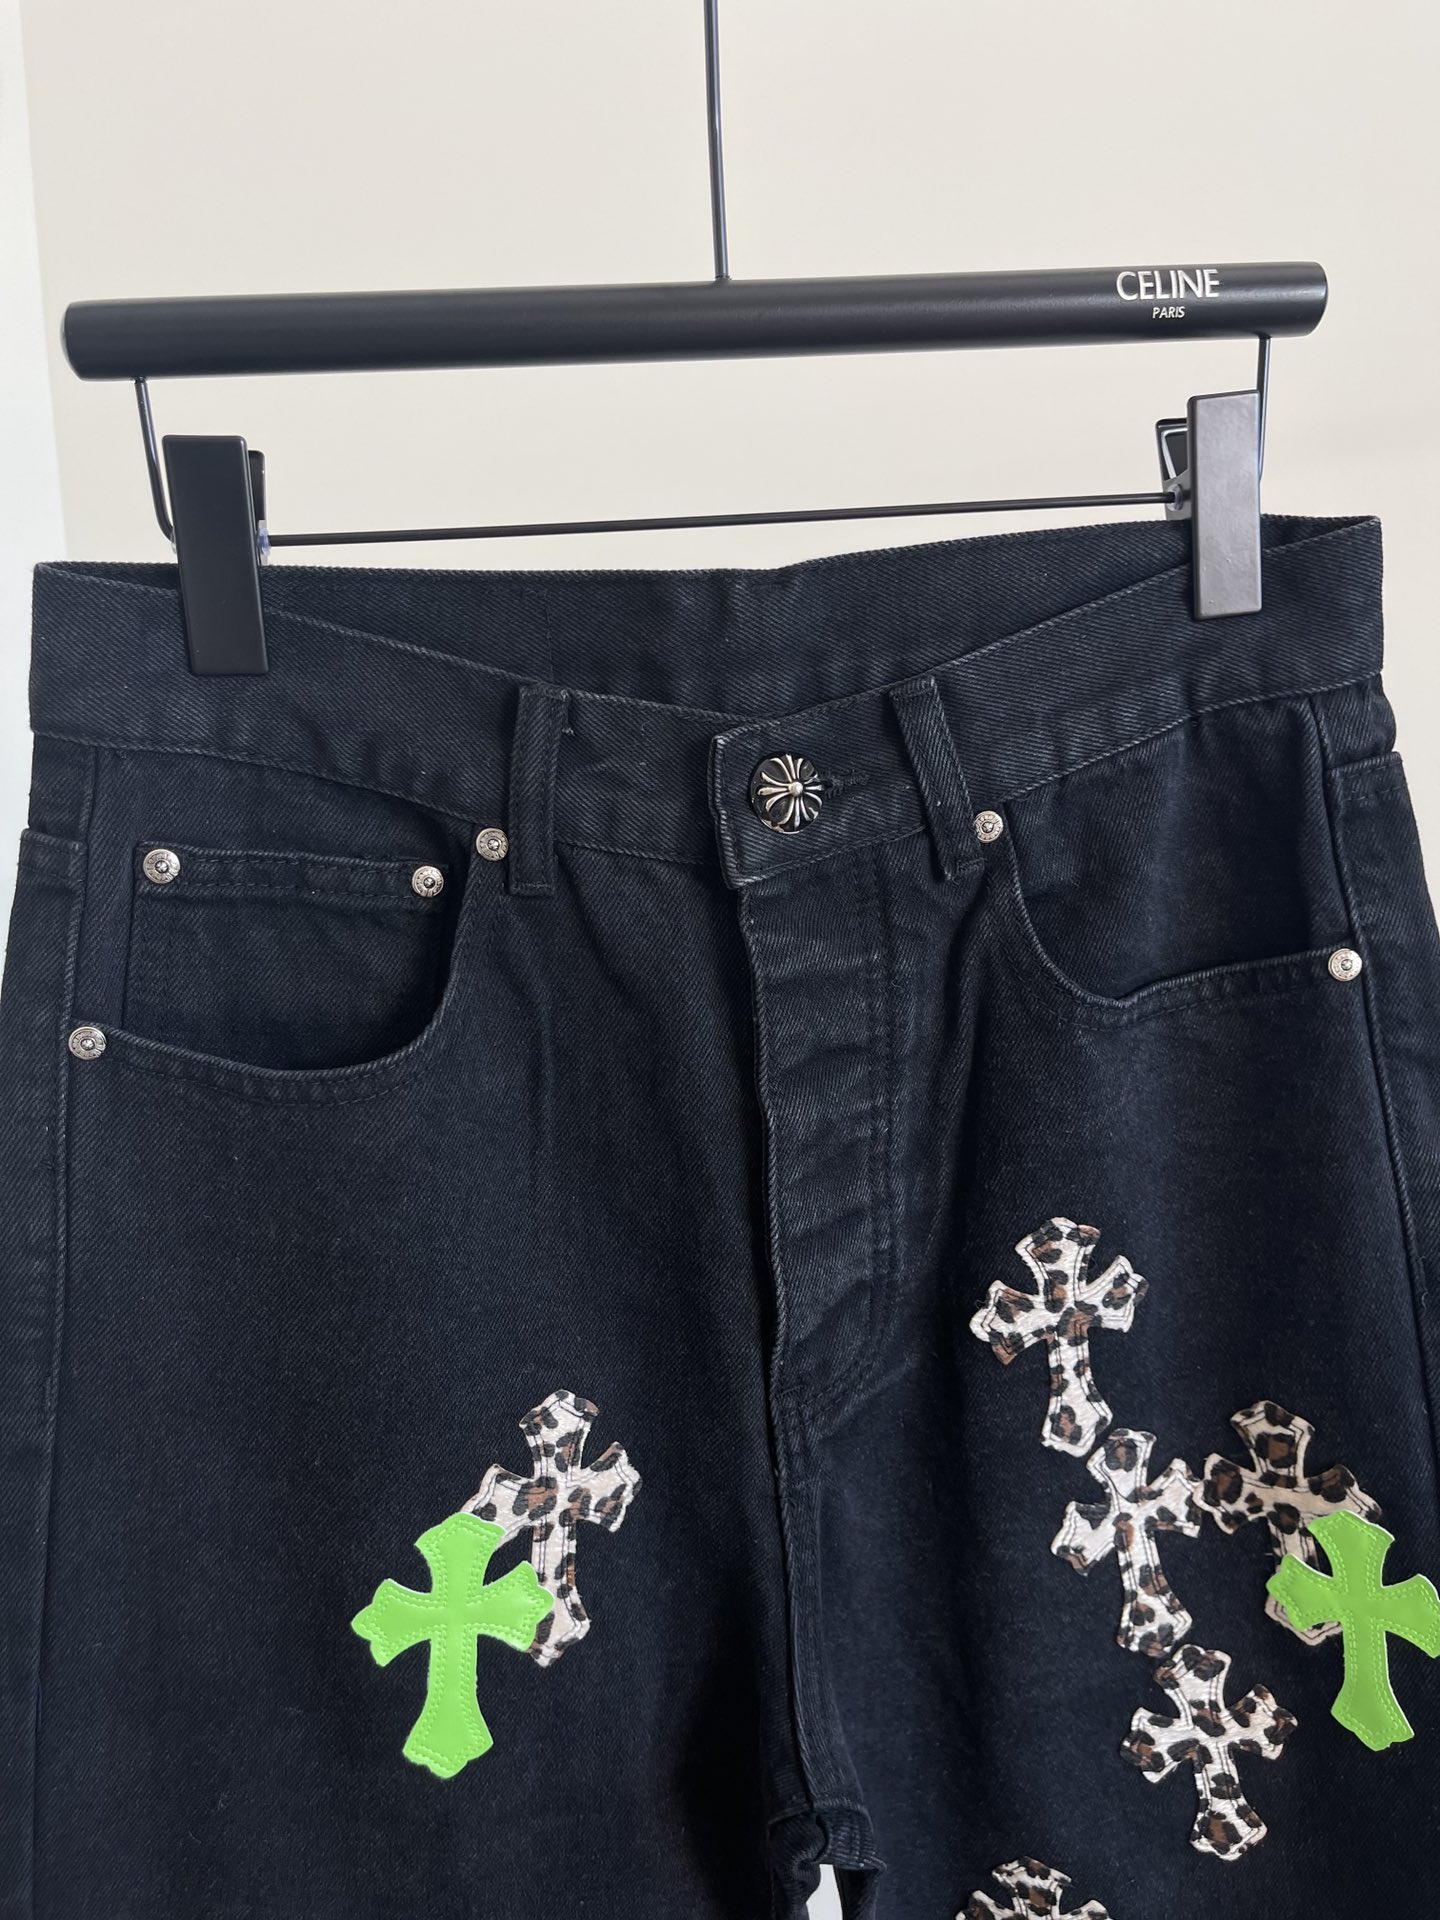 Replica Chrome Hearts Black Denim Jeans Green Leopard Crosses Size 33 $6,250 Available in-store & online | Instagram